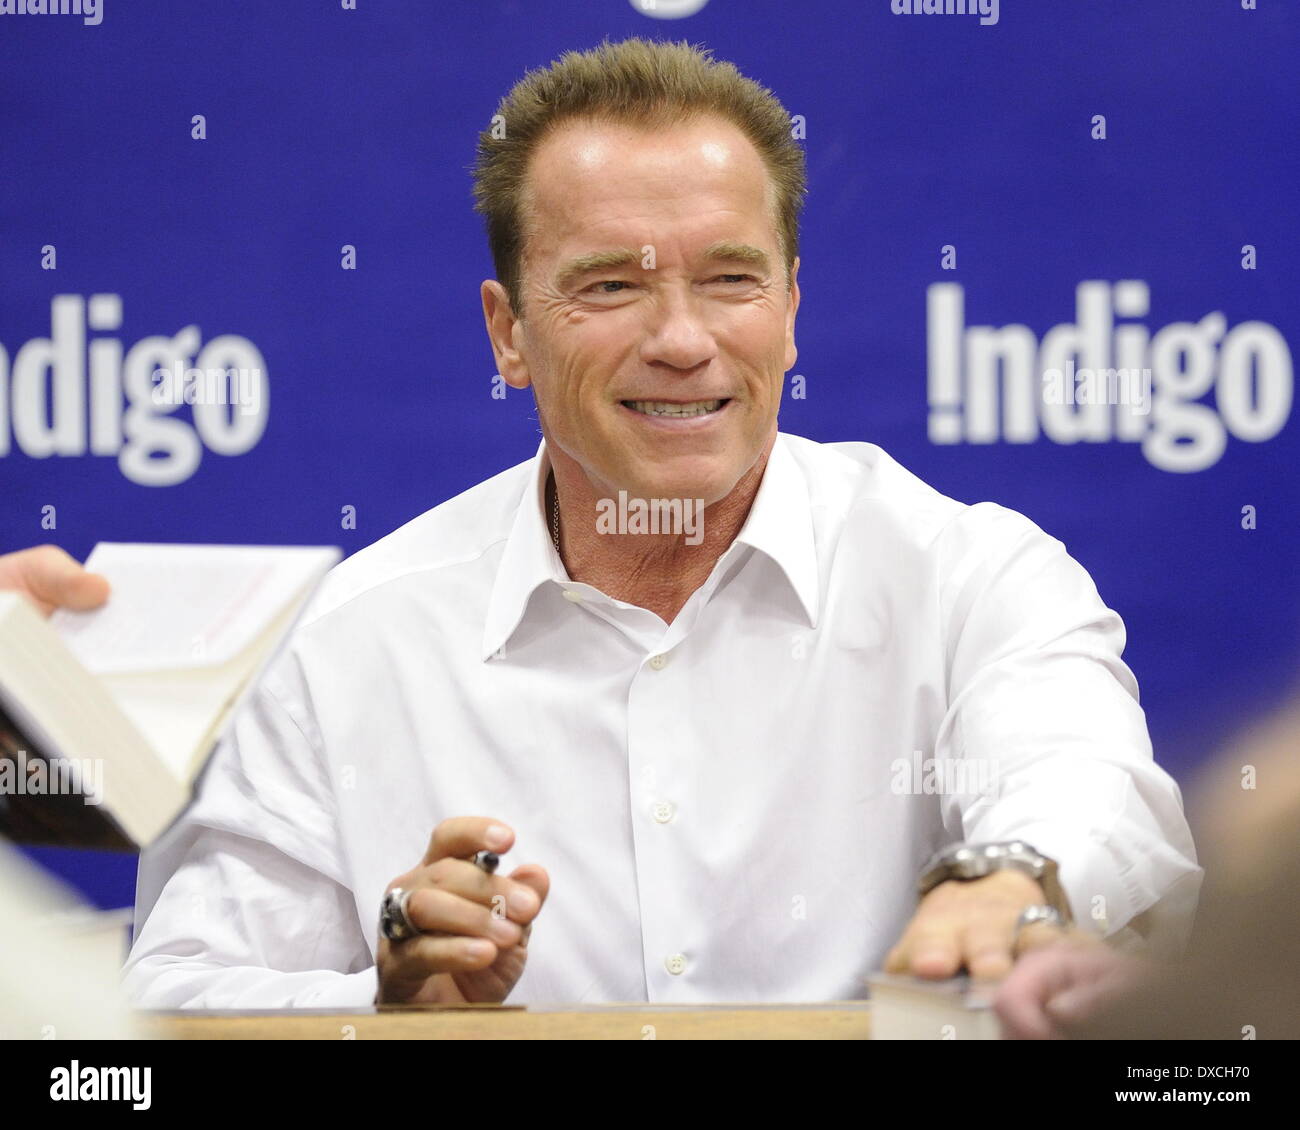 Arnold Schwarzenegger attends a book signing at Indigo Manulife Centre for his latest book 'Total Recall' Toronto, Canada - 04.10.12 Featuring: Arnold Schwarzenegger When: 04 Oct 2012 Stock Photo